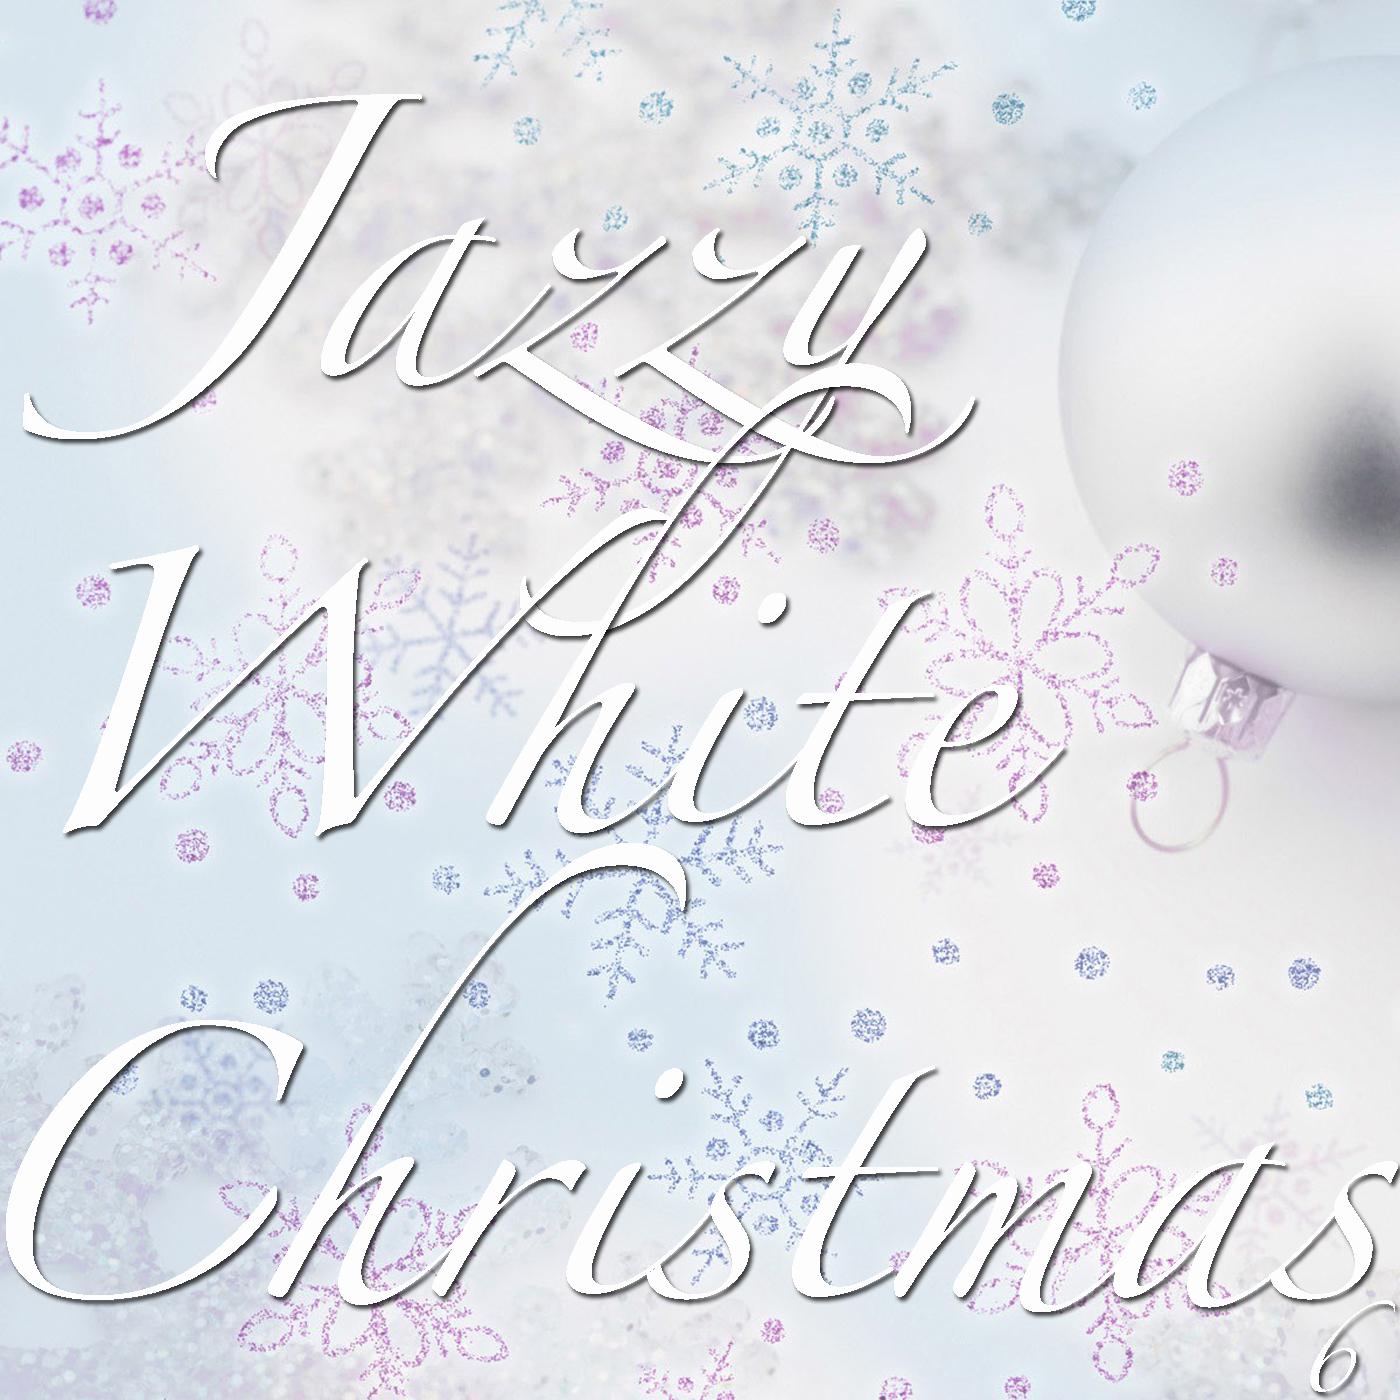 Jazzy White Christmas, Vol. 6